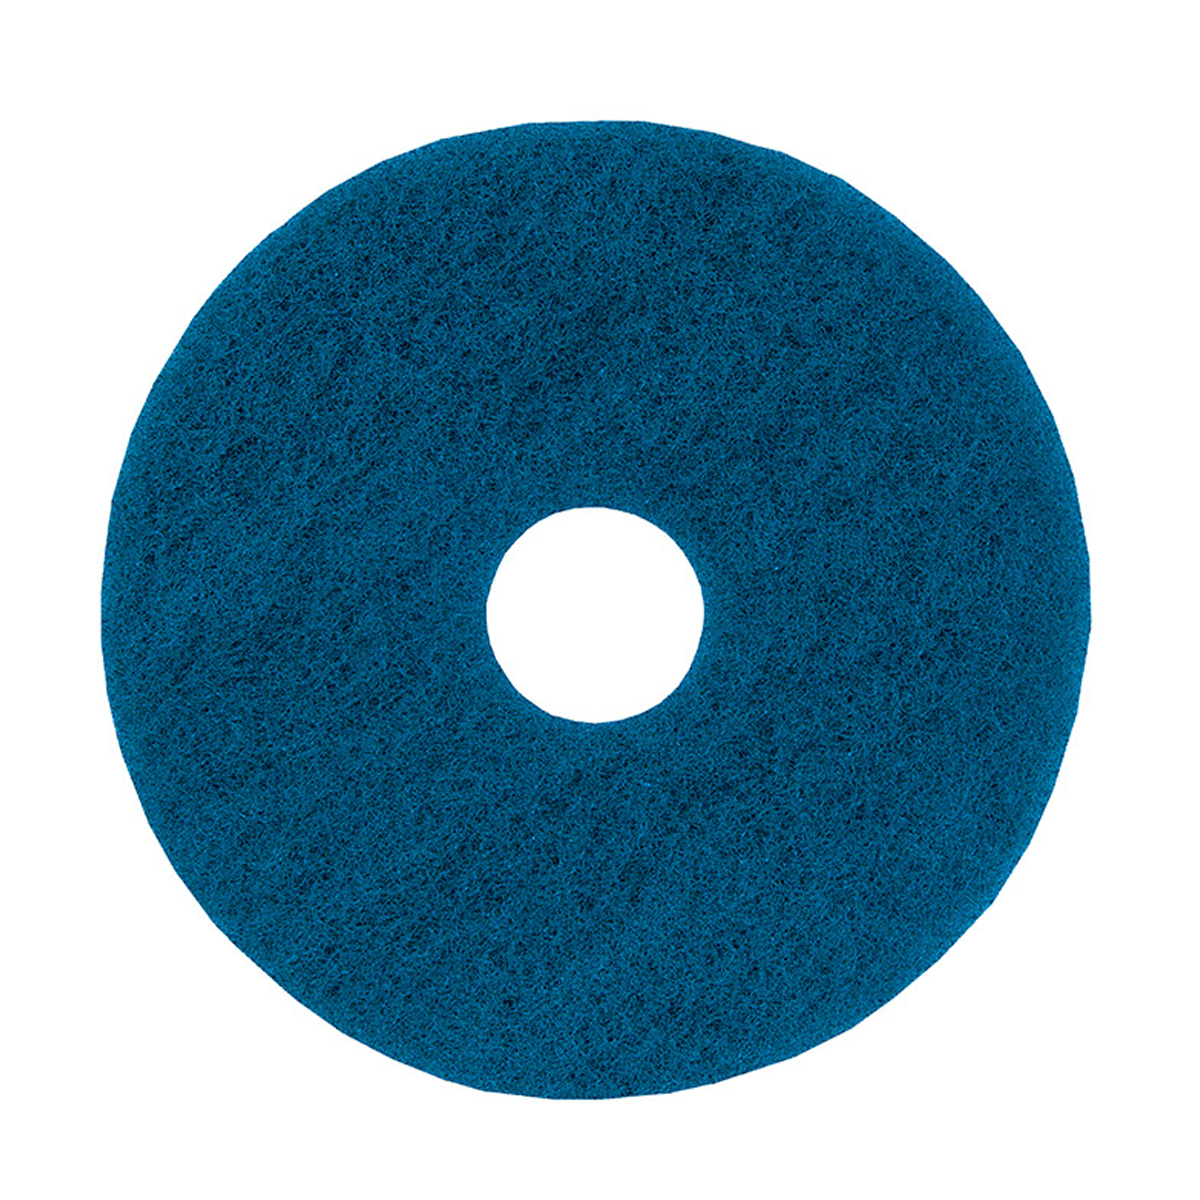 Standard speed floor pads 17 inch - blue - box of 5